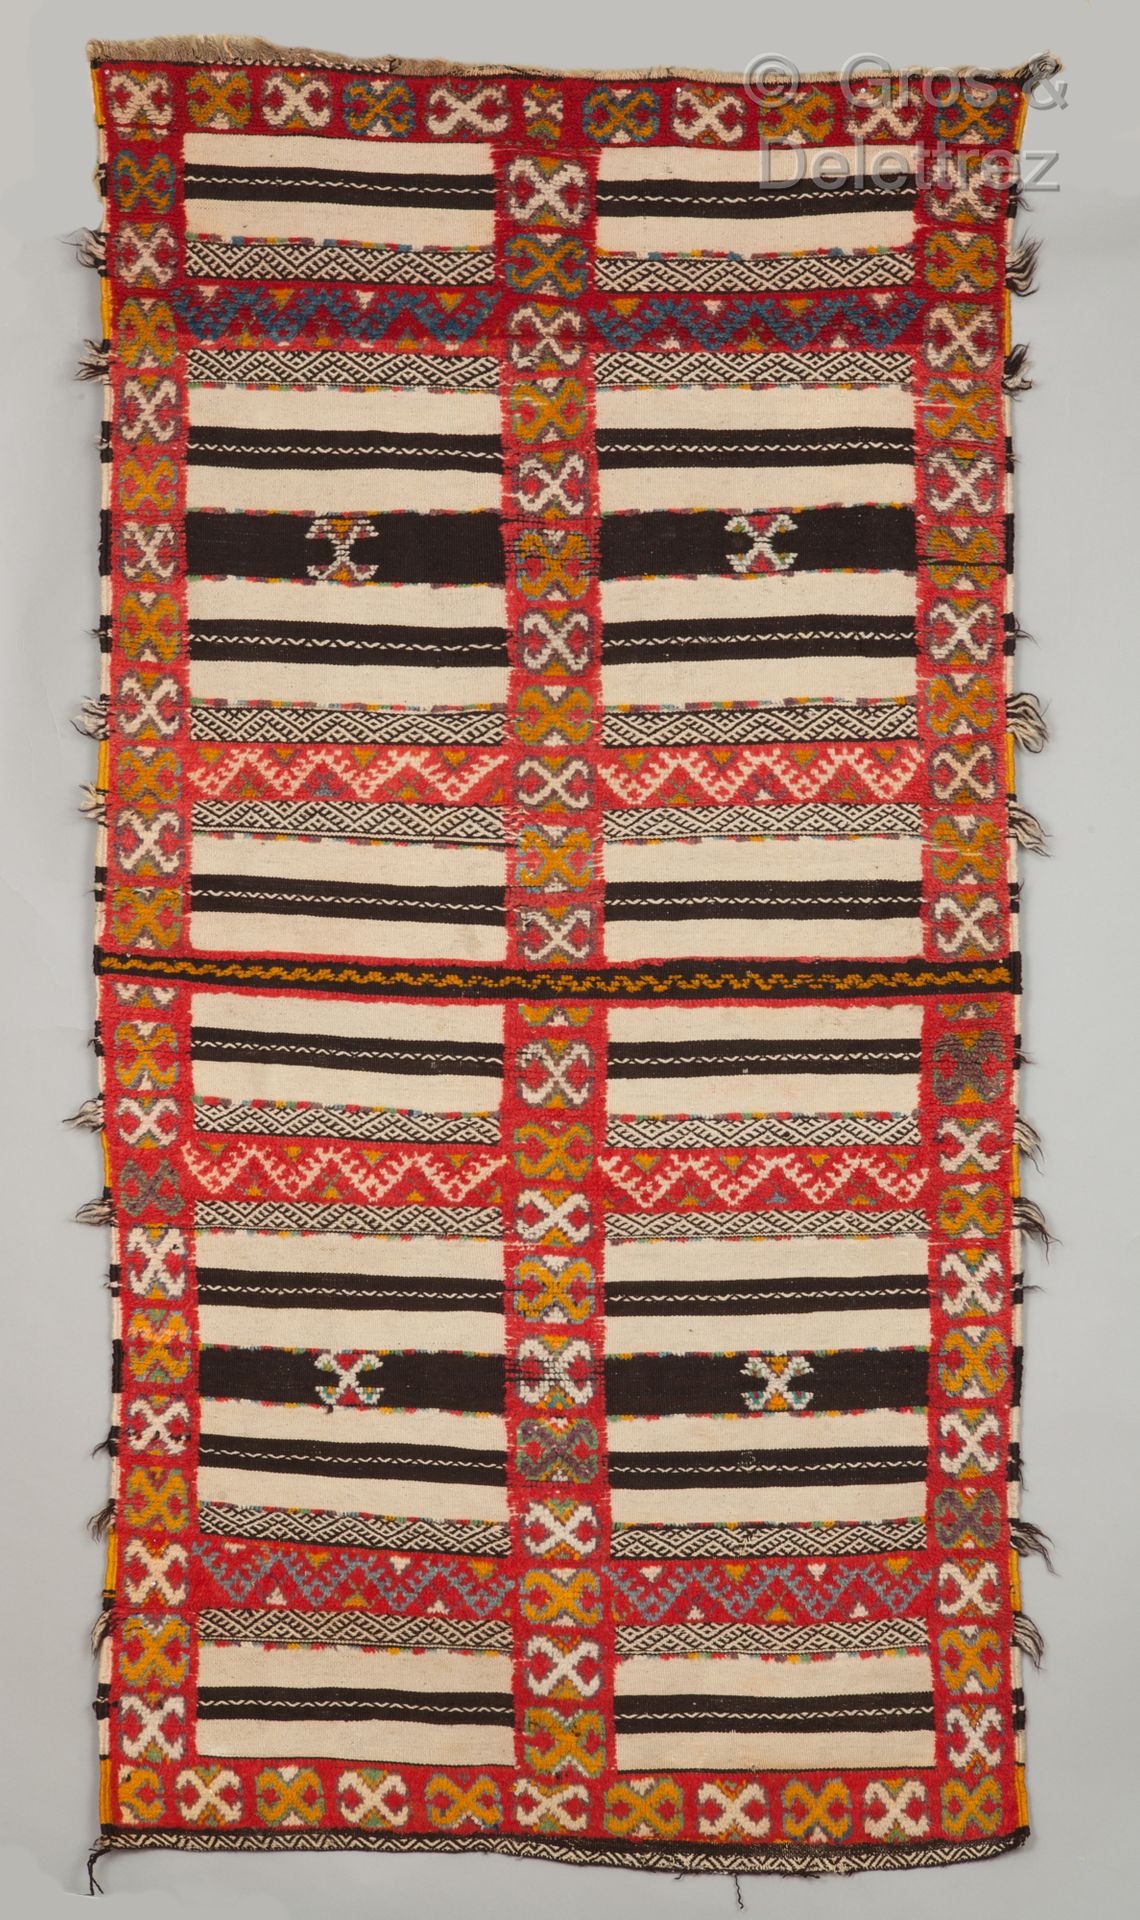 Null "摩洛哥Ait Ouaouzguite的打结和编织的地毯

摩洛哥Ait Ouaouzguite的古董地毯

装饰由一条中央垂直带和四条水平带组成，连&hellip;